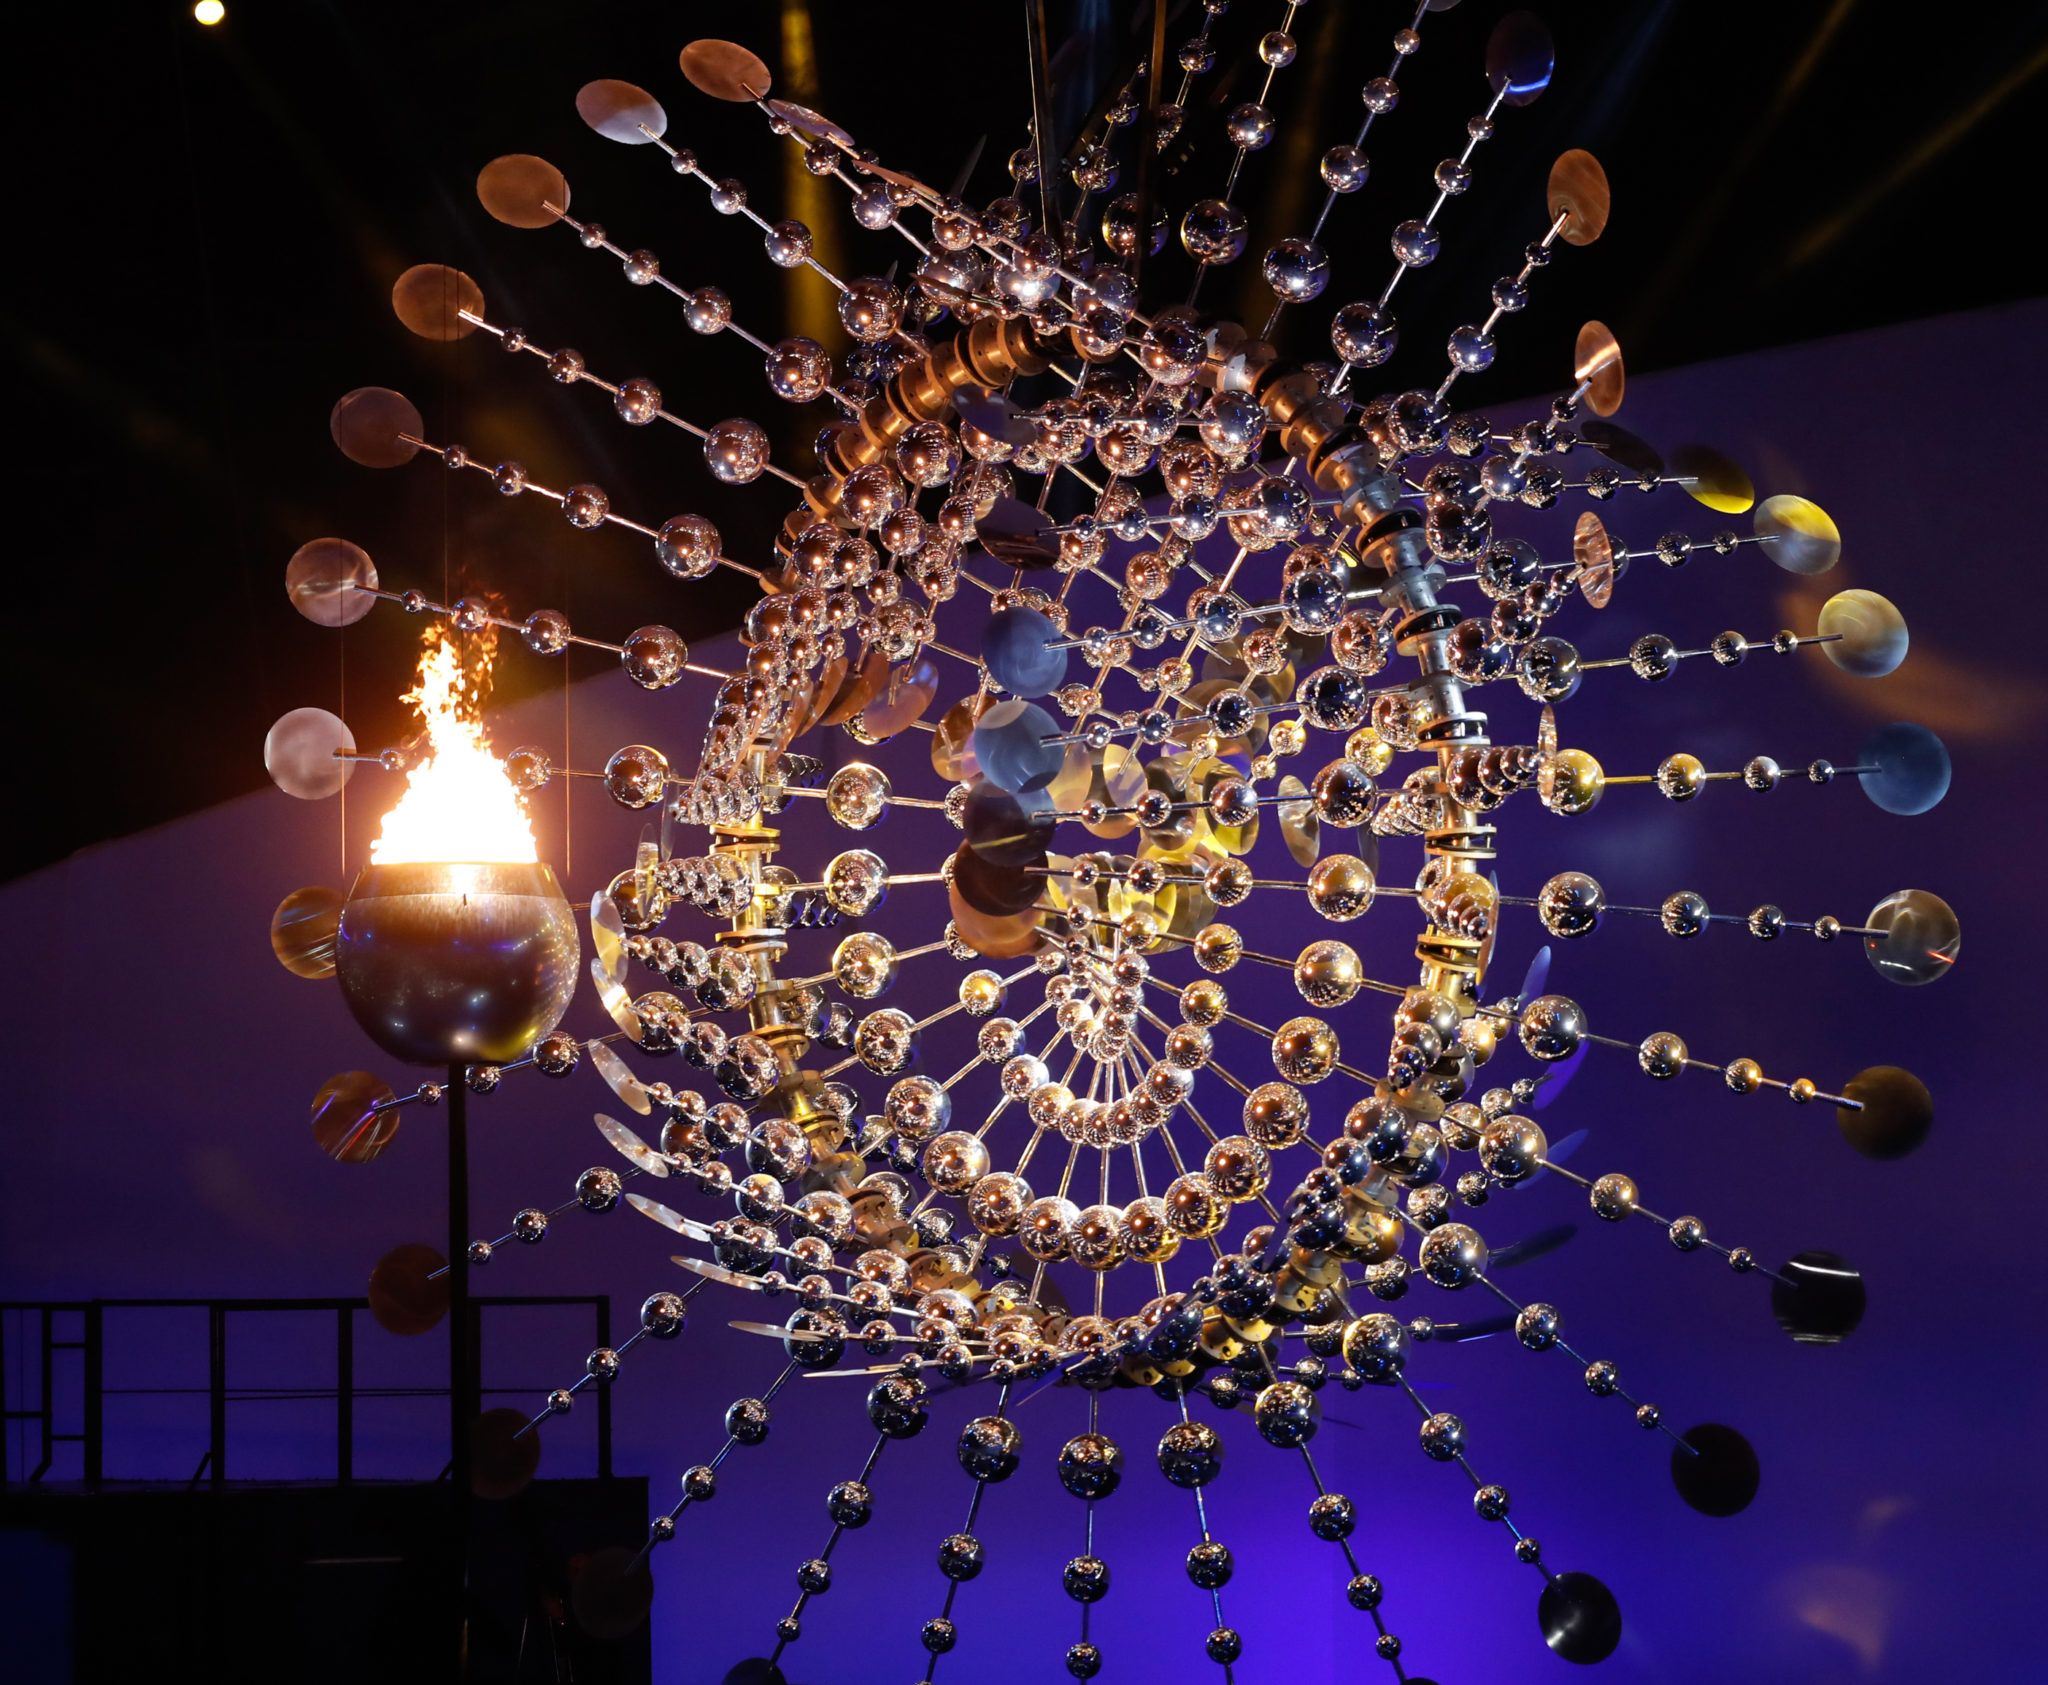 Rio Olympic cauldron lights up the night